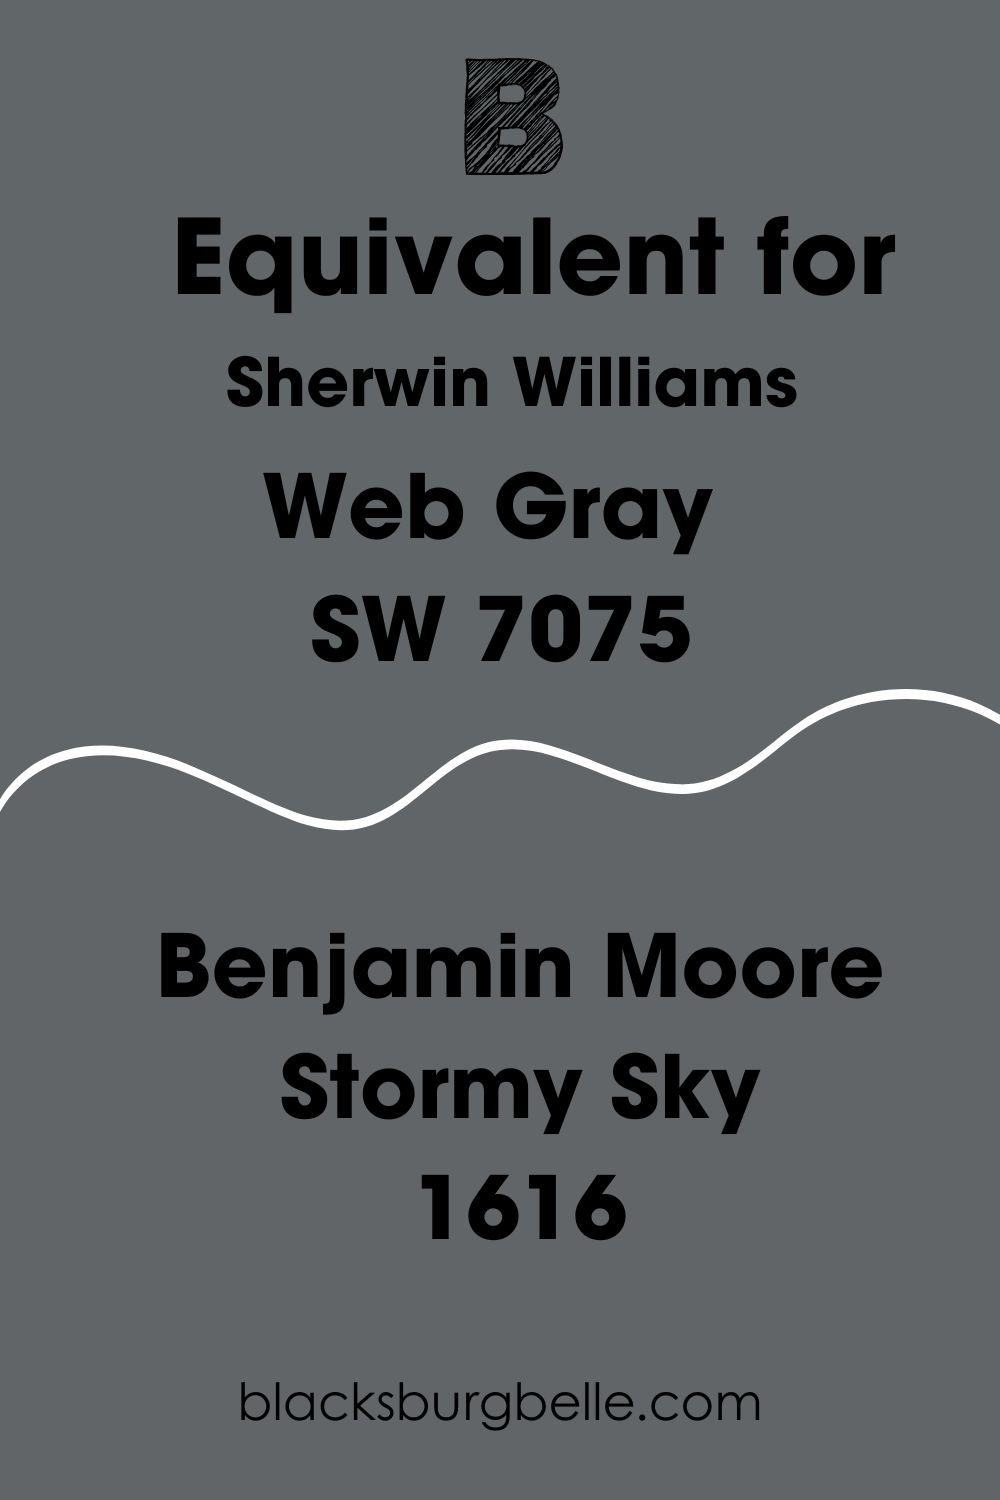 Web Gray SW 7075 (12)